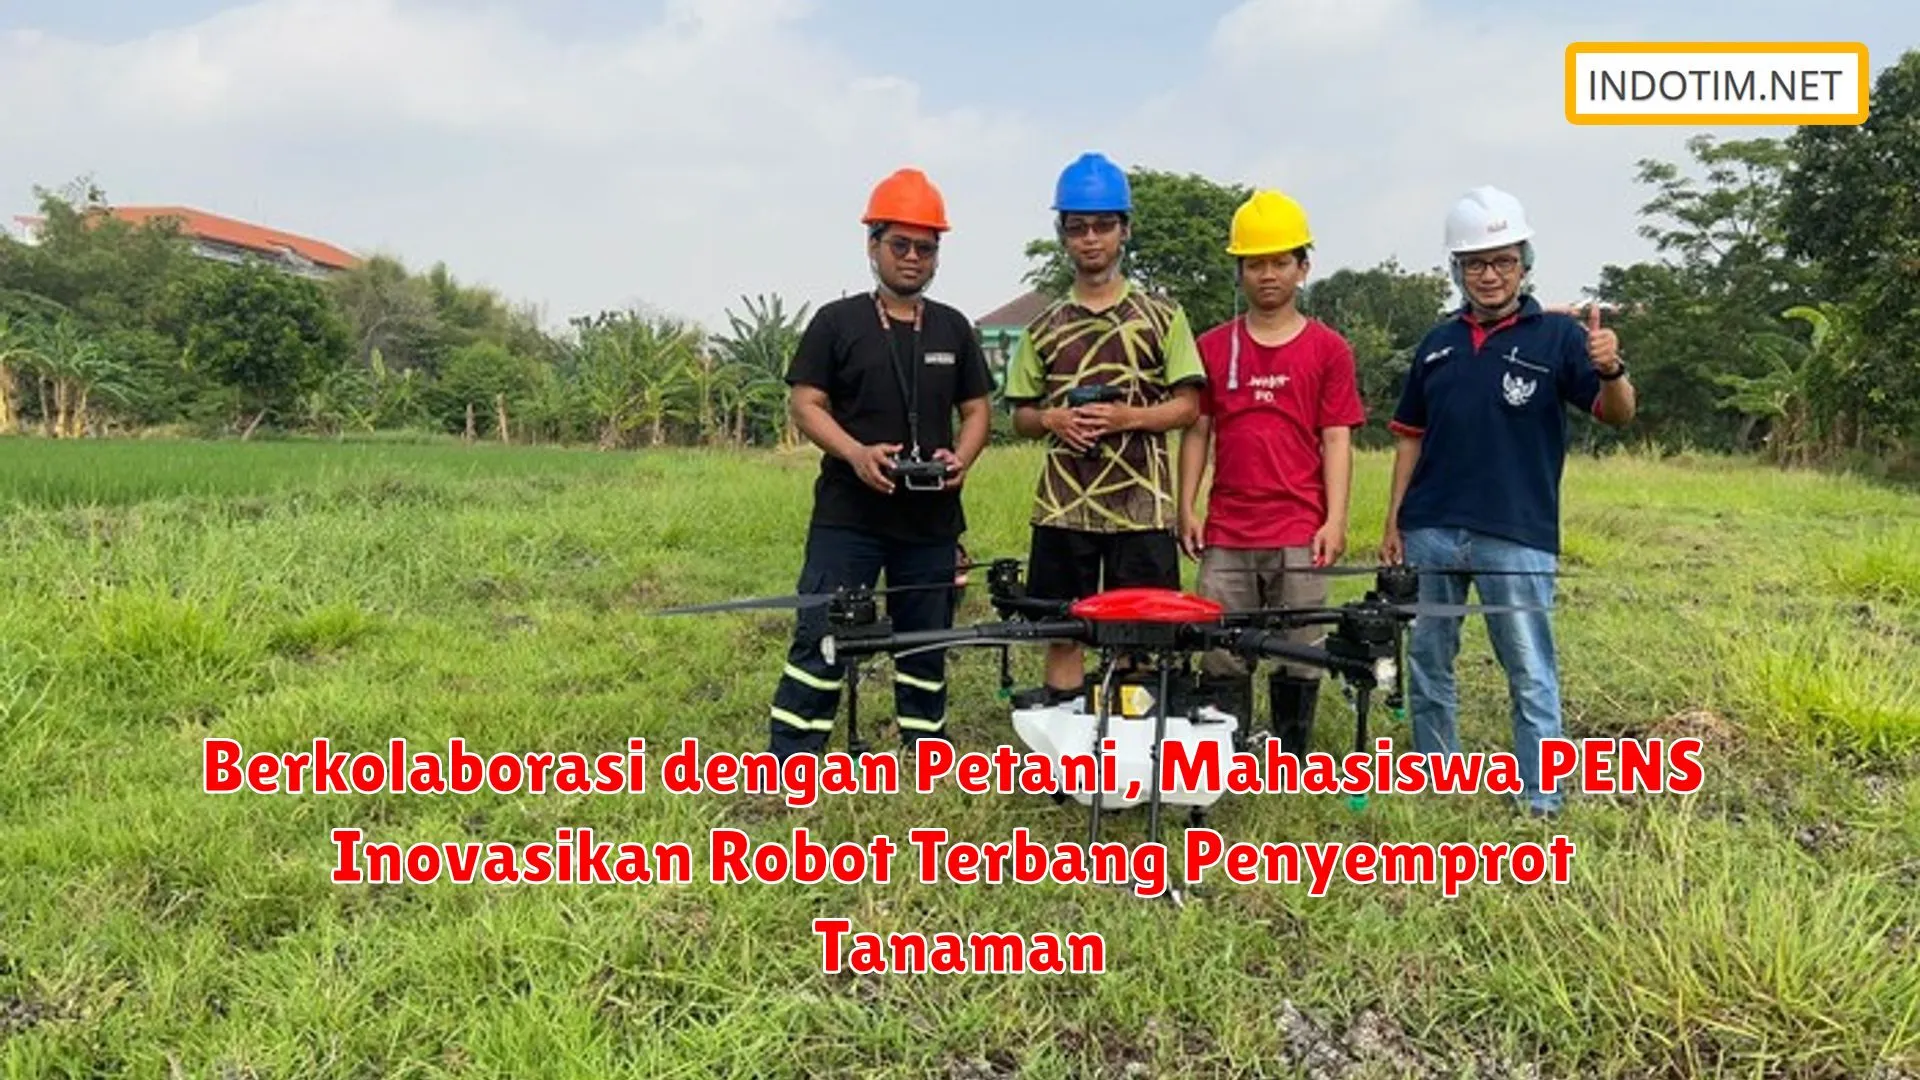 Berkolaborasi dengan Petani, Mahasiswa PENS Inovasikan Robot Terbang Penyemprot Tanaman